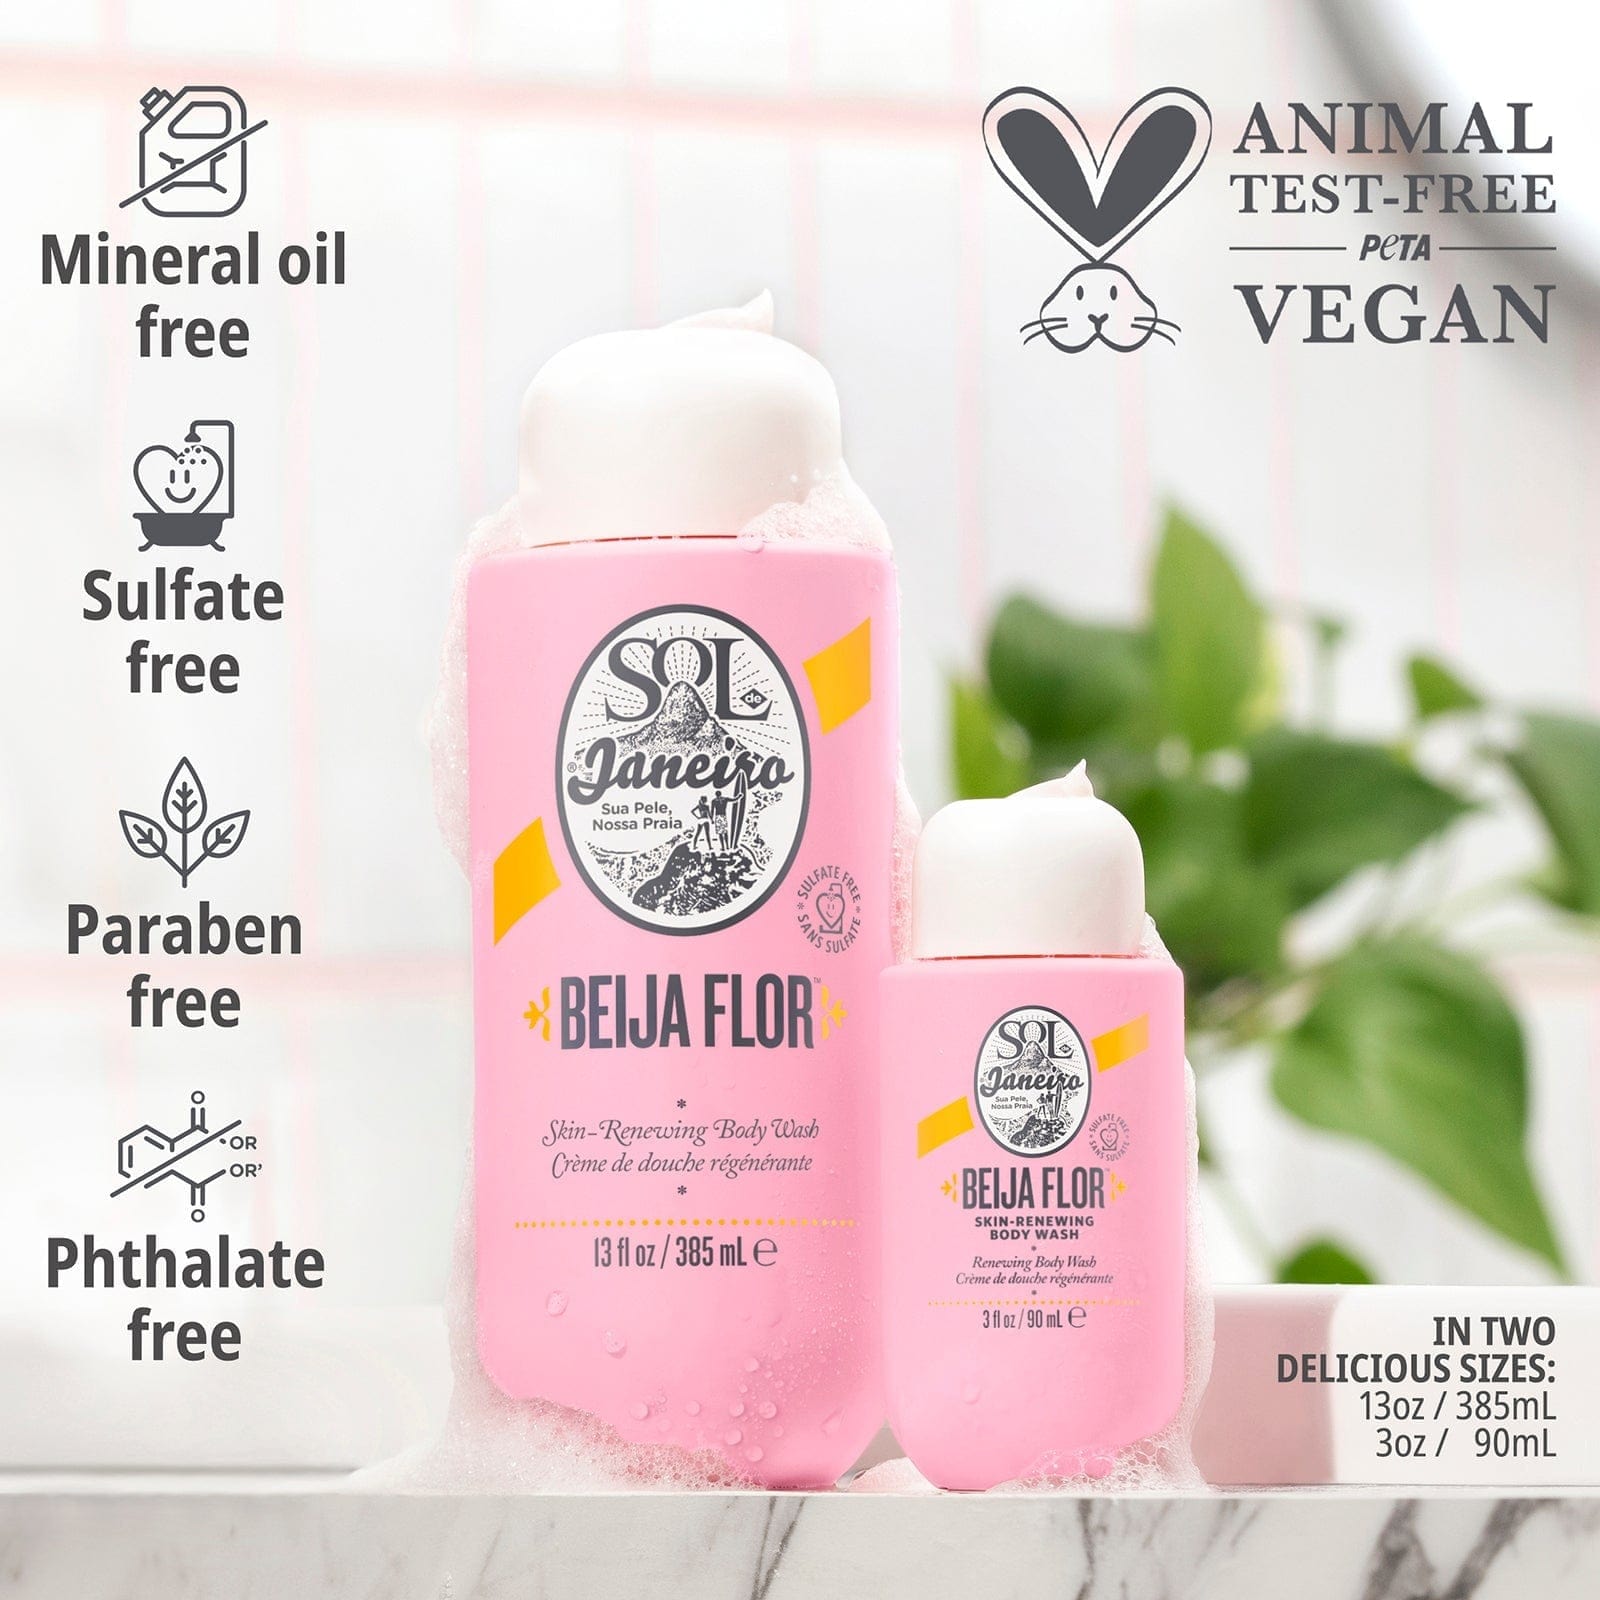 Animal test-free vega, free of mineral oil, sulfates, parabens, phthalates